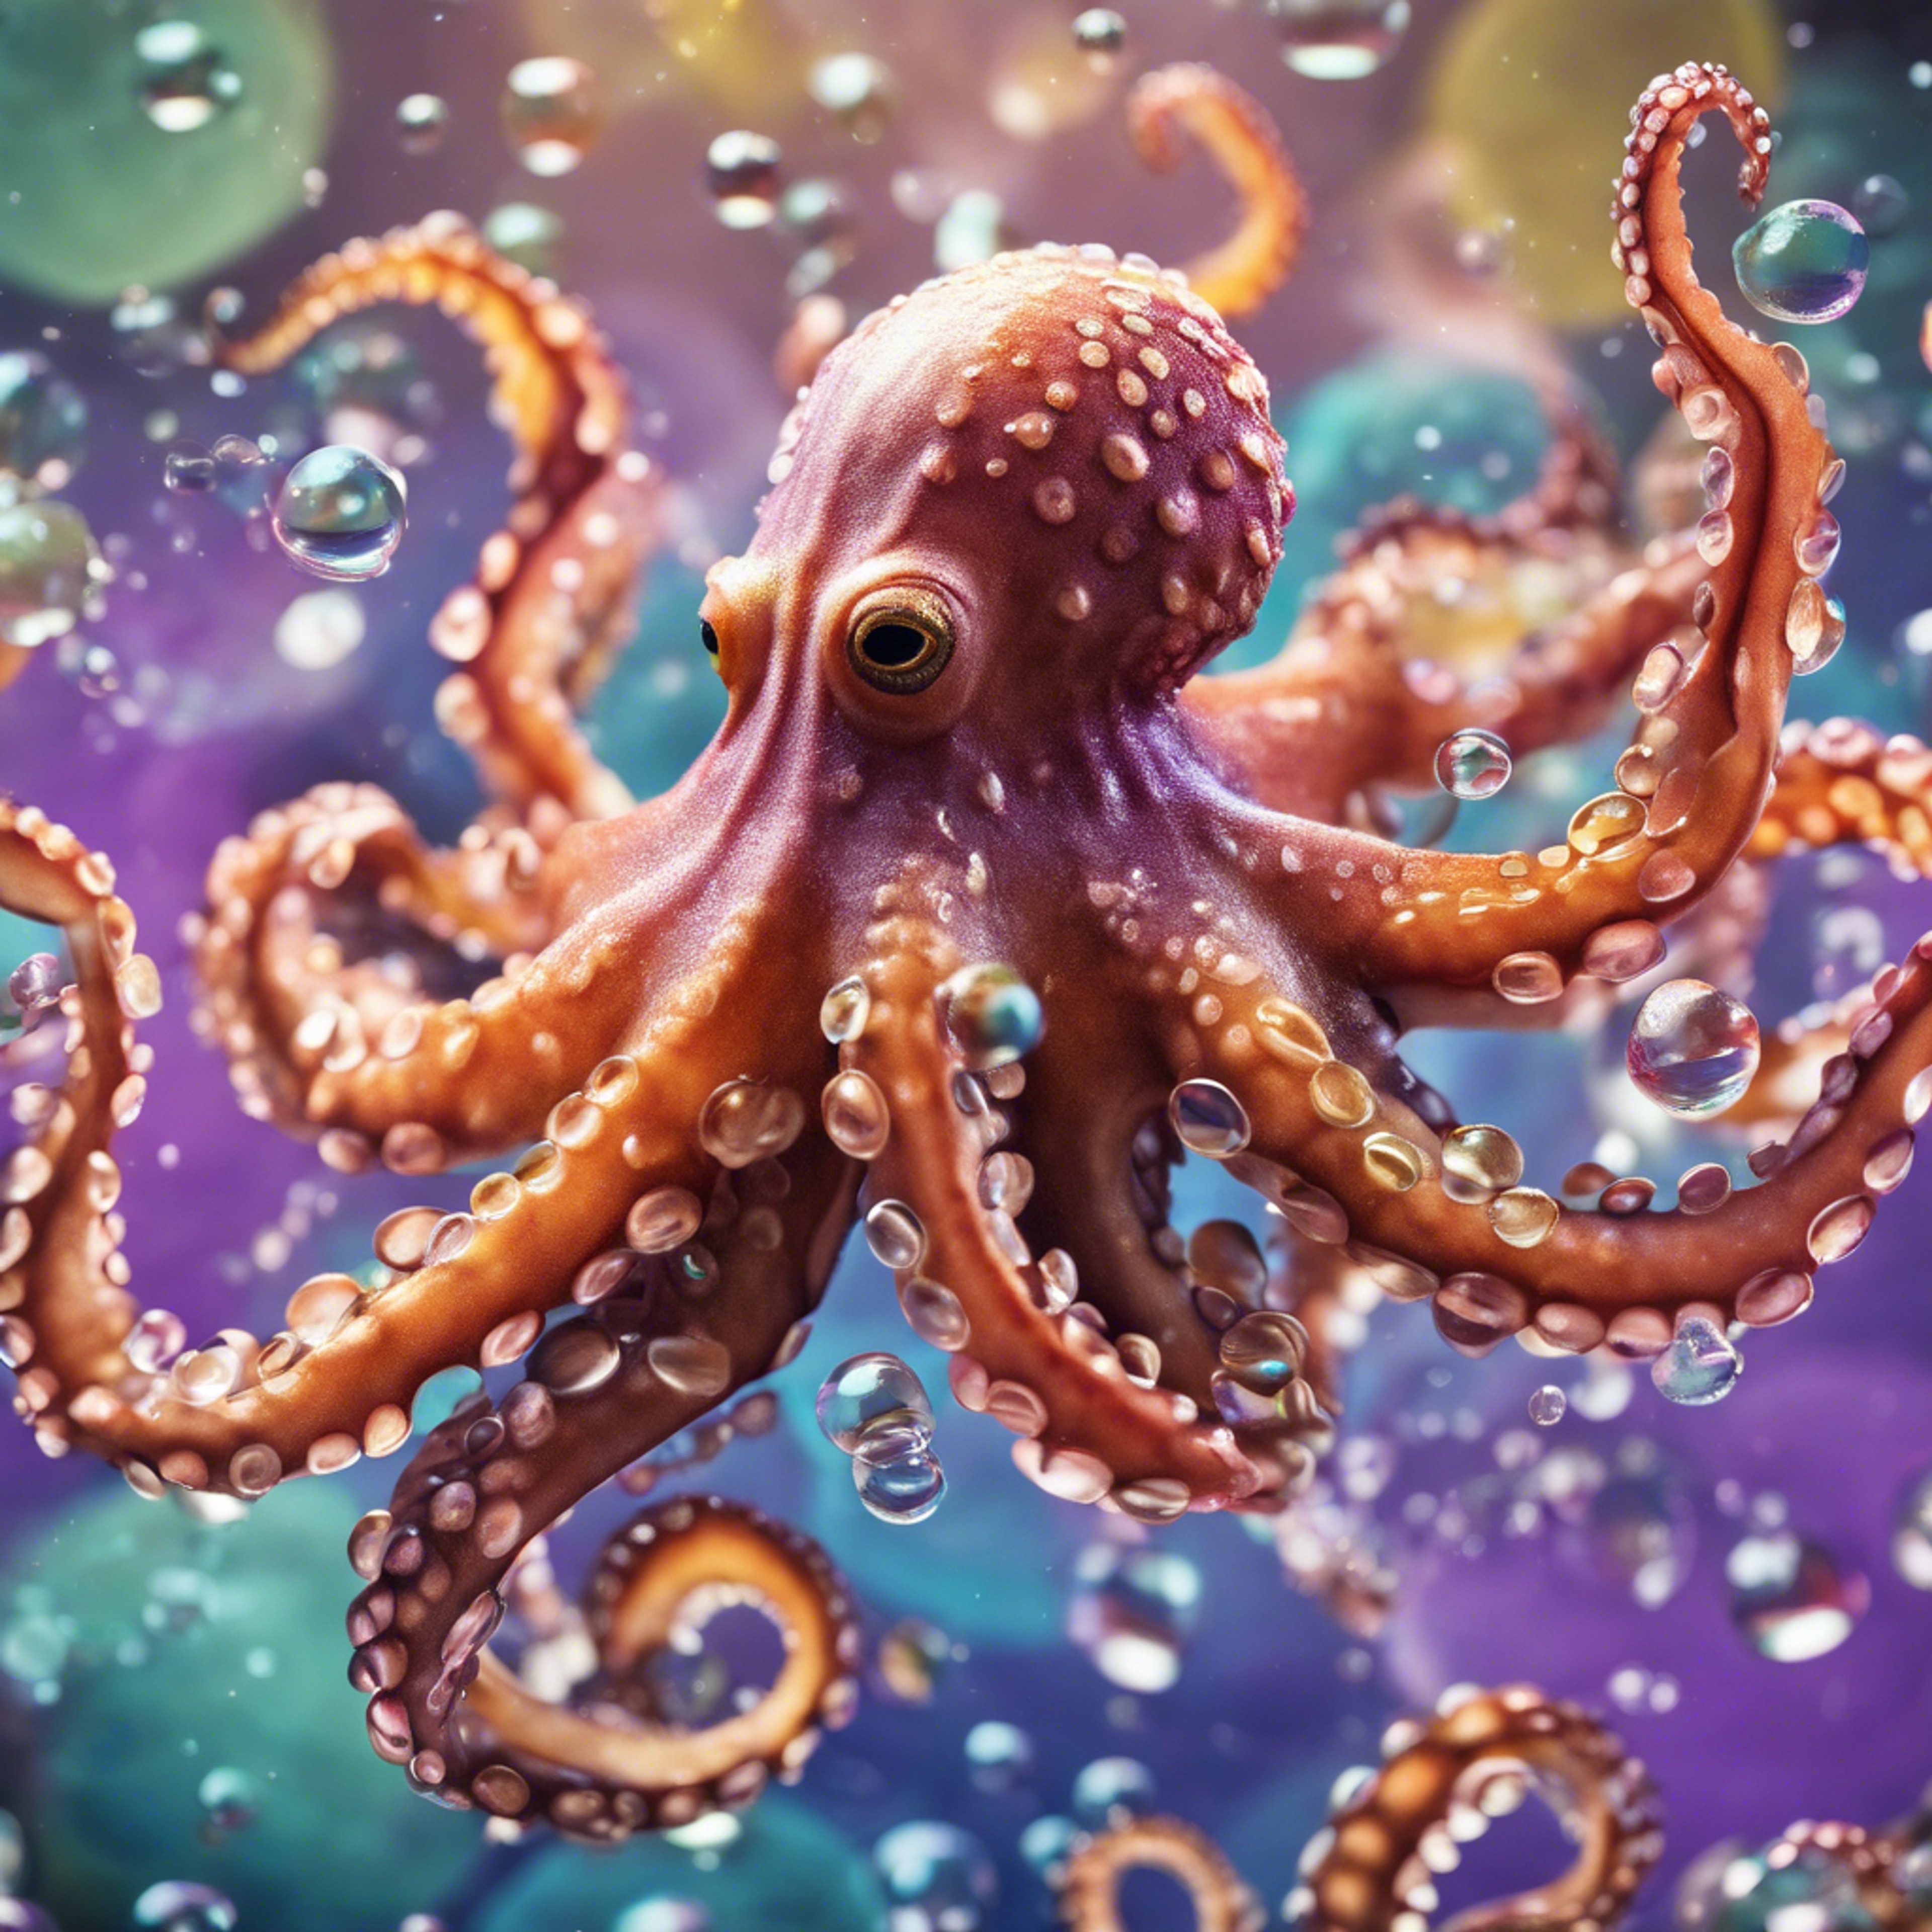 A rainbow-colored octopus joyfully dancing amidst a swirl of bubbles. Wallpaper[7c61138499844efe8ebf]